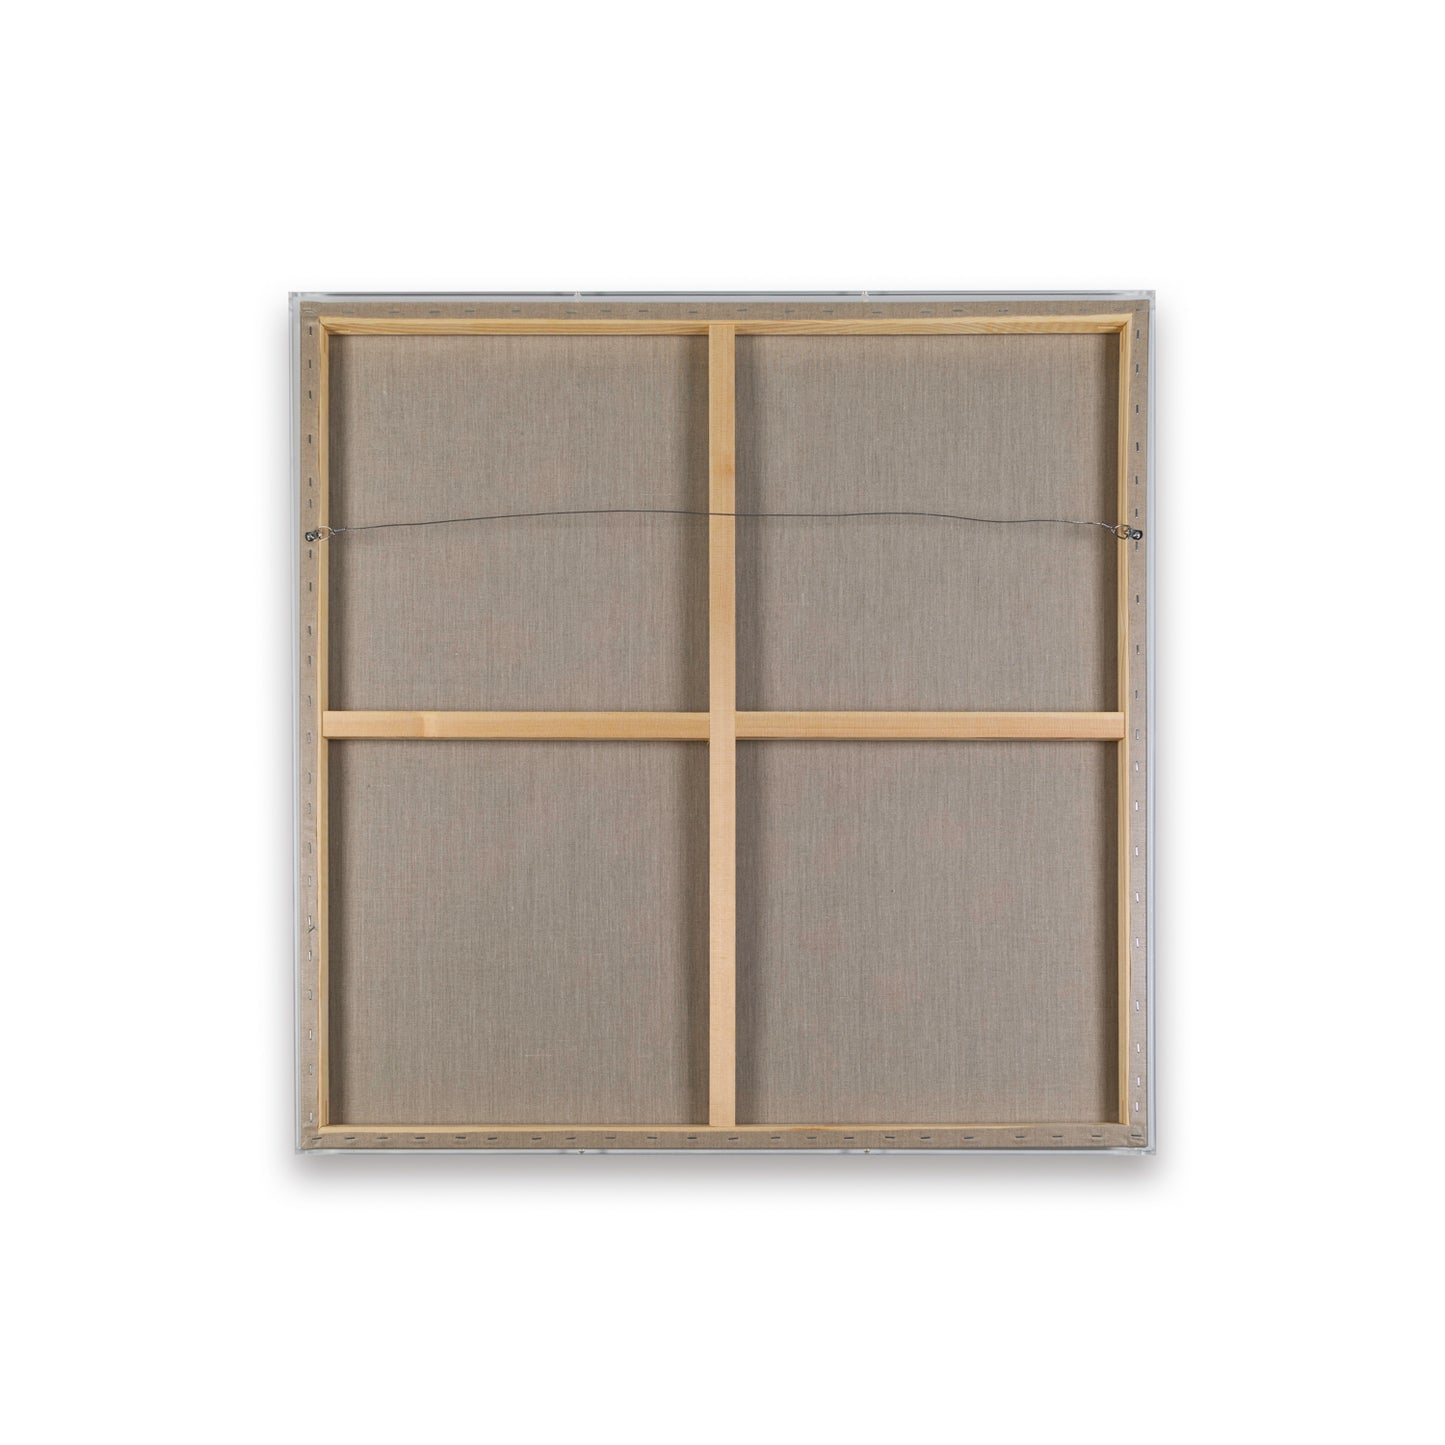 Framed Yves Saint Laurent Butterflies on Brown Silk Scarf in a 36x36x2" Shadowbox